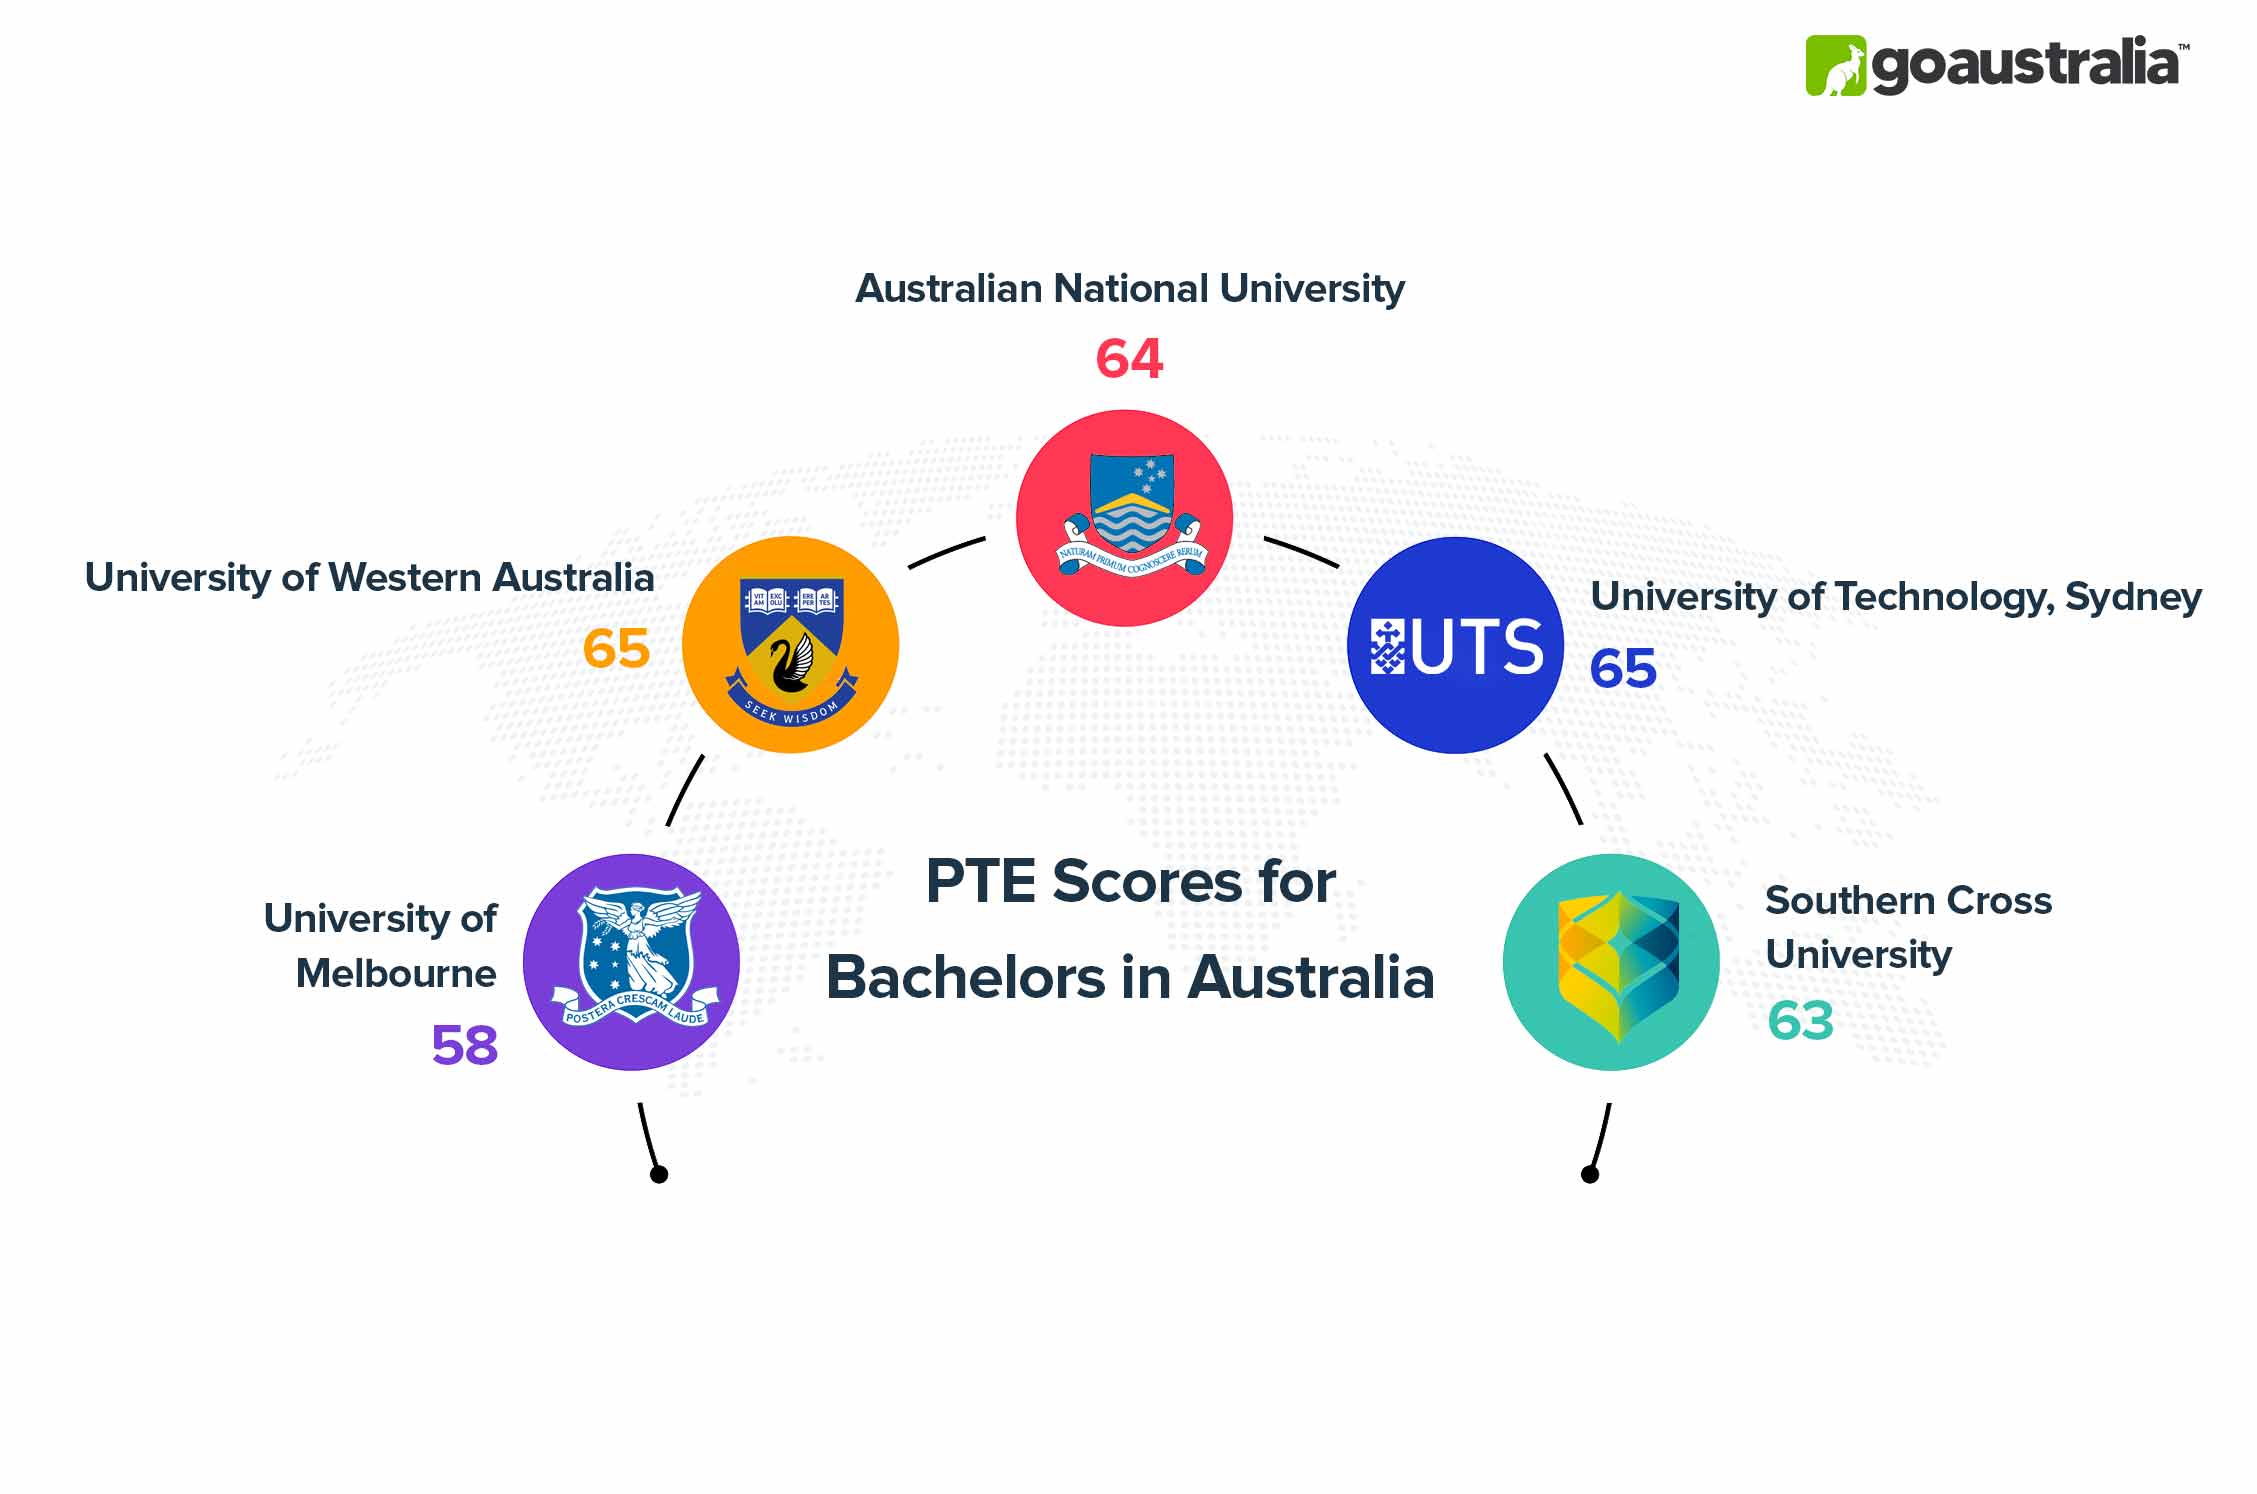 Bachelors in Australia PTE Score